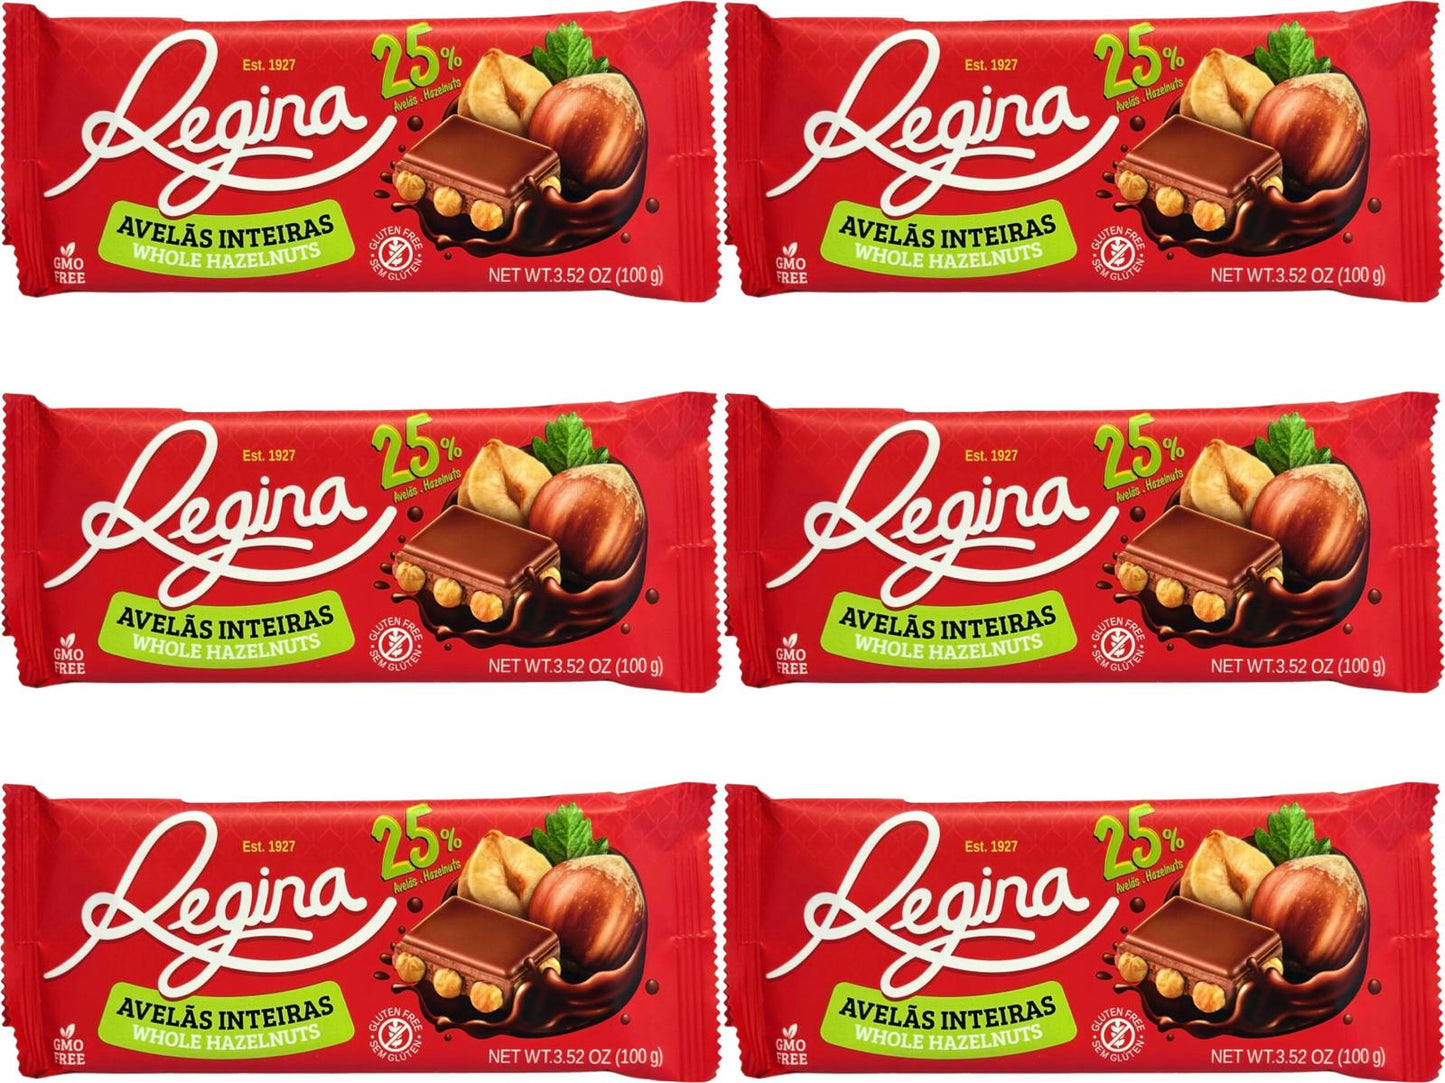 Regina Avelas Inteiras Portuguese Milk Chocolate with Whole Hazelnuts 100g - 6 pack 600g total